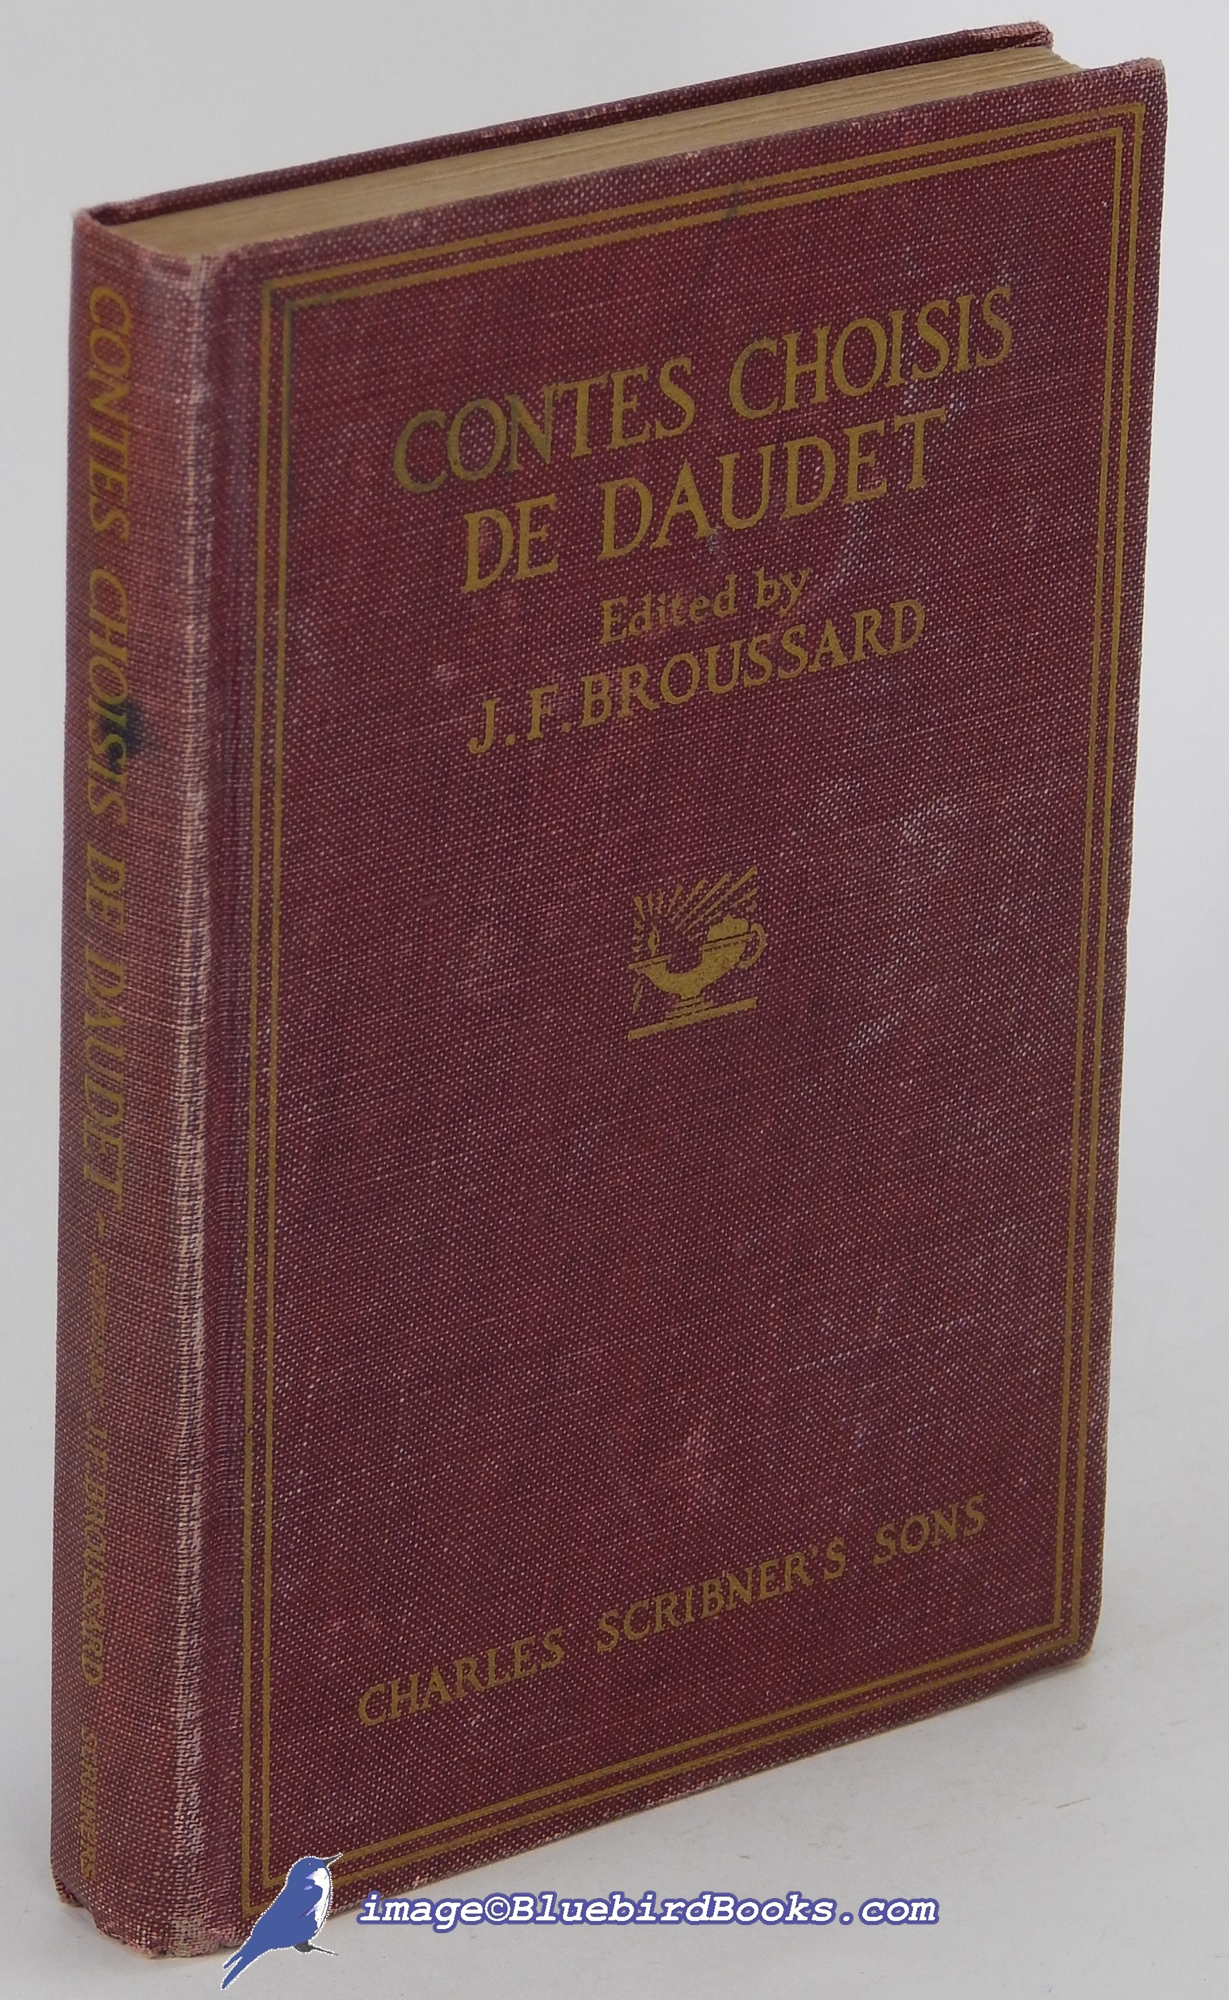 DAUDET, ALPHONSE; BROUSSARD, JAS. F. (EDITOR) - Contes Choisis de Daudet (Selected Tales by [Alphonse] Daudet, in French Language): With Grammar Reviews and Exercises